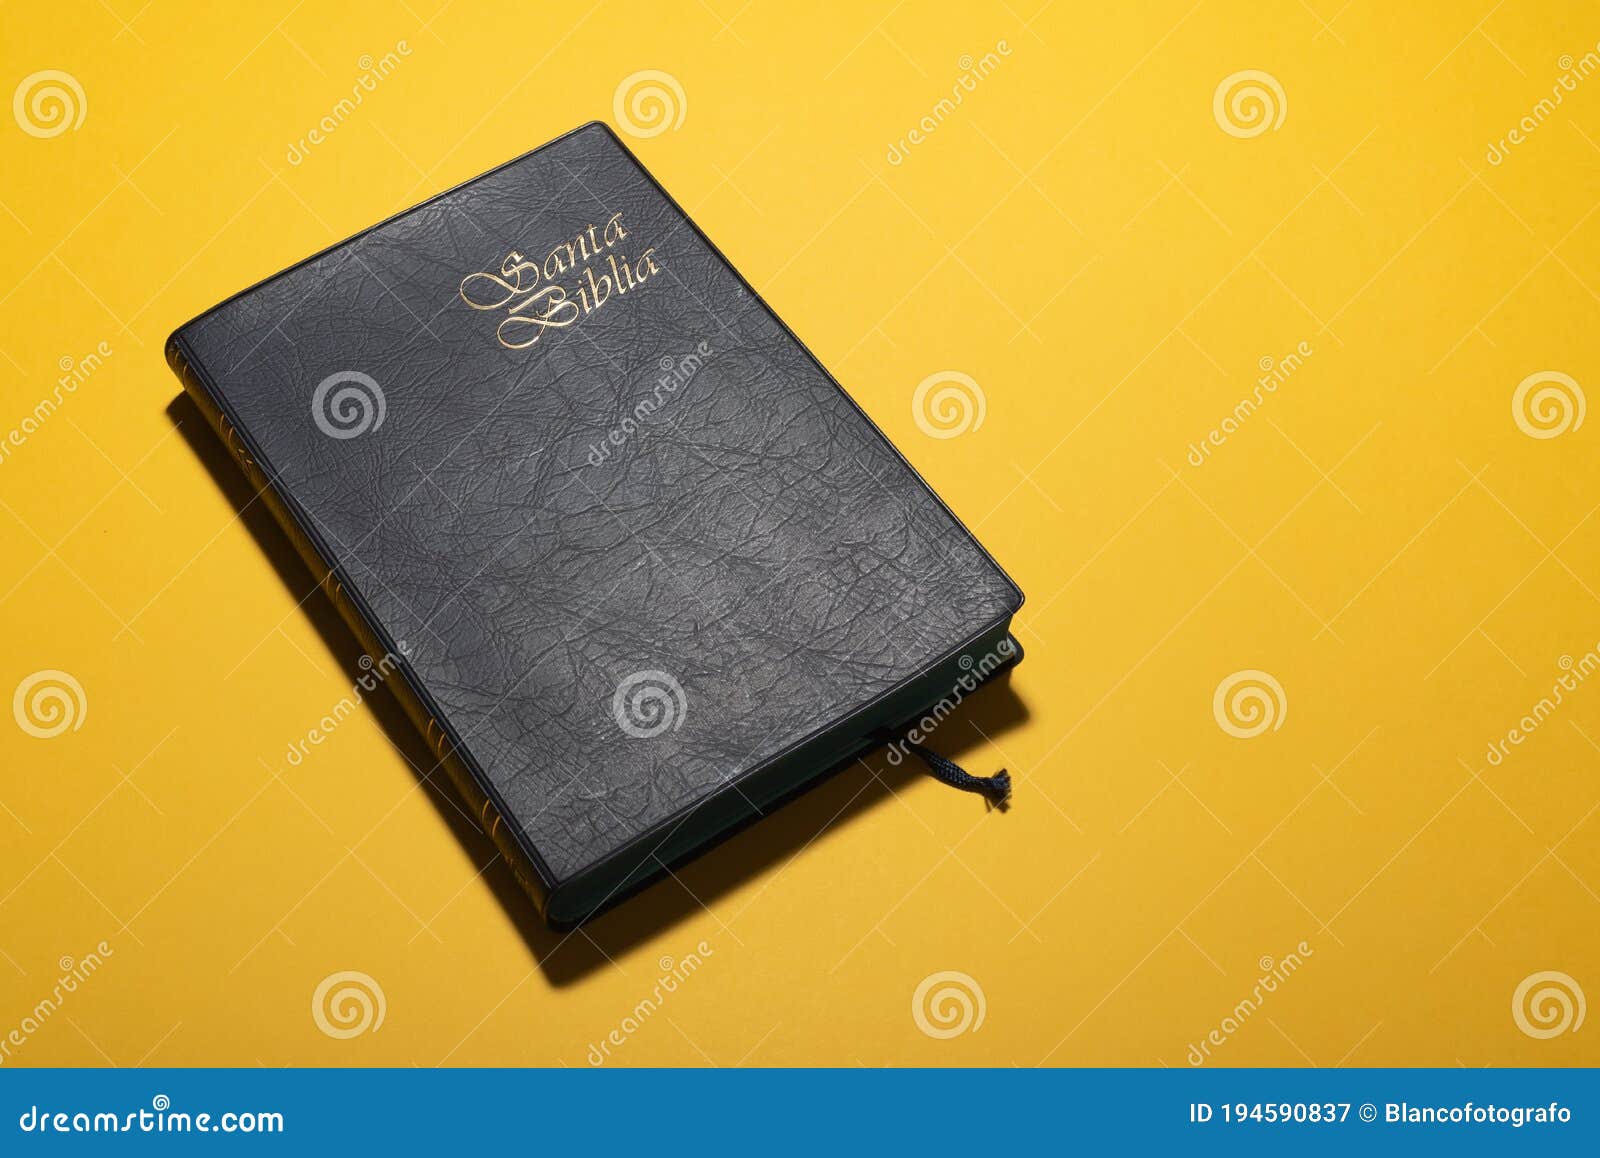 santa biblia holy bible in spanish over mustard yellow desk